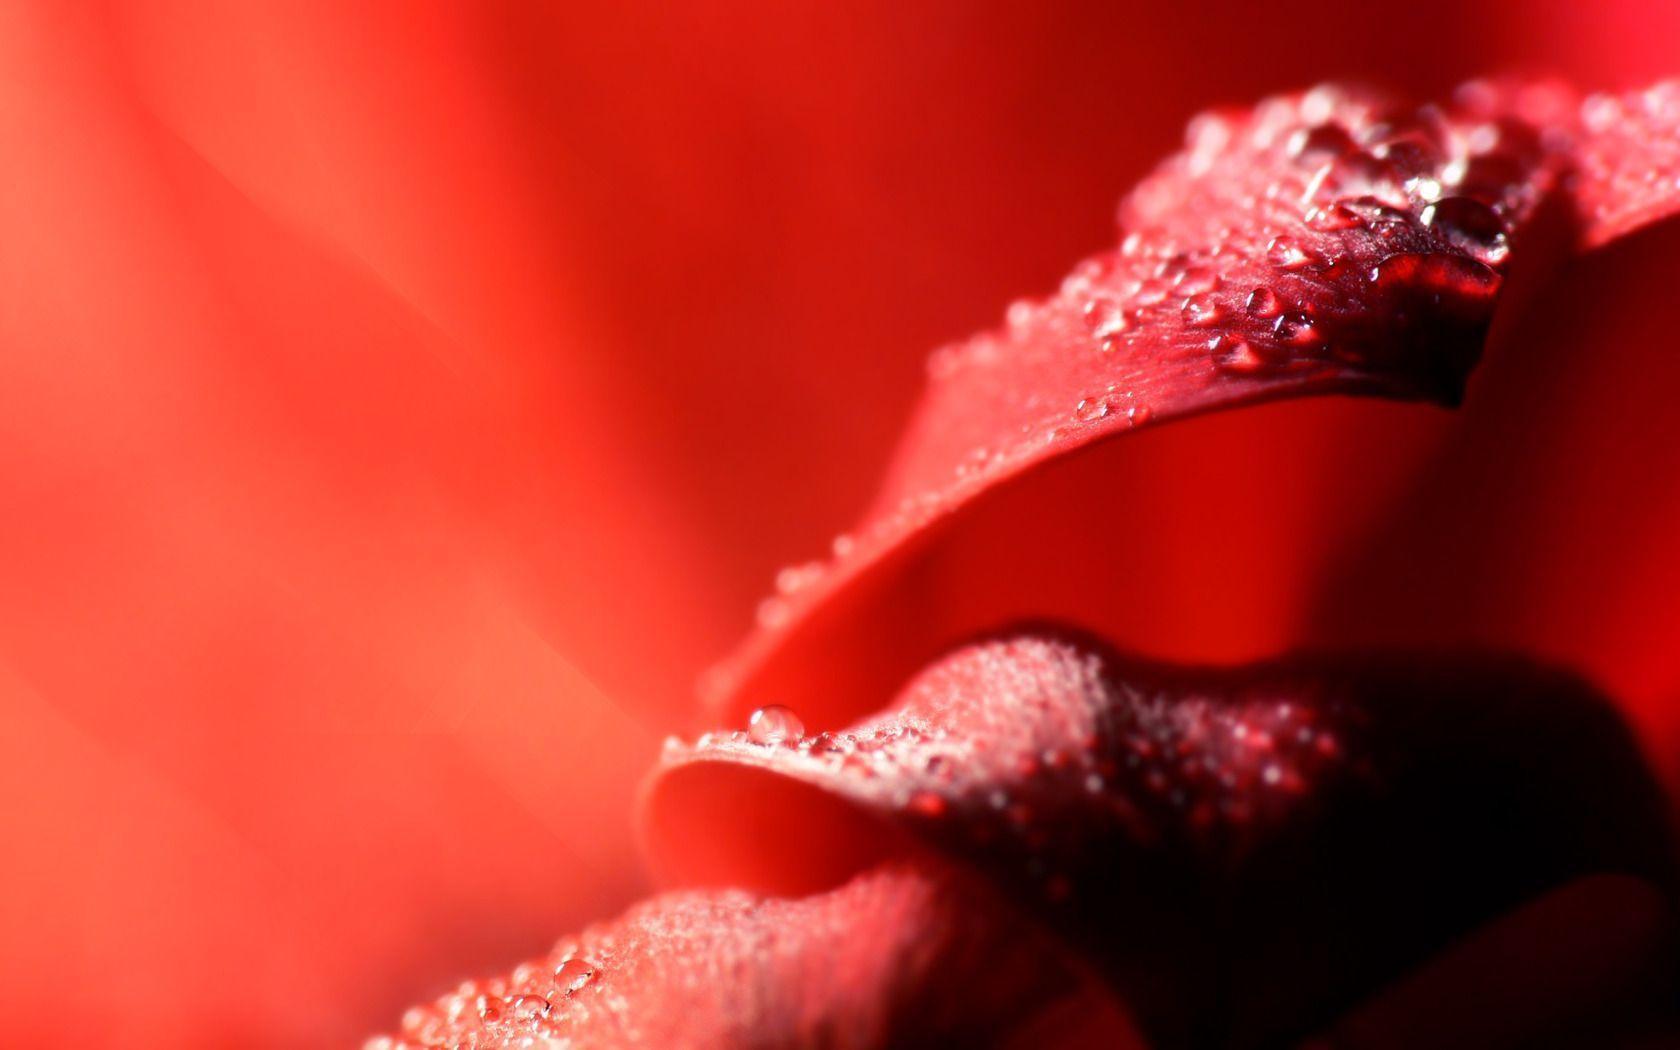 Passion Red, Wet Petals widescreen wallpaper. Wide